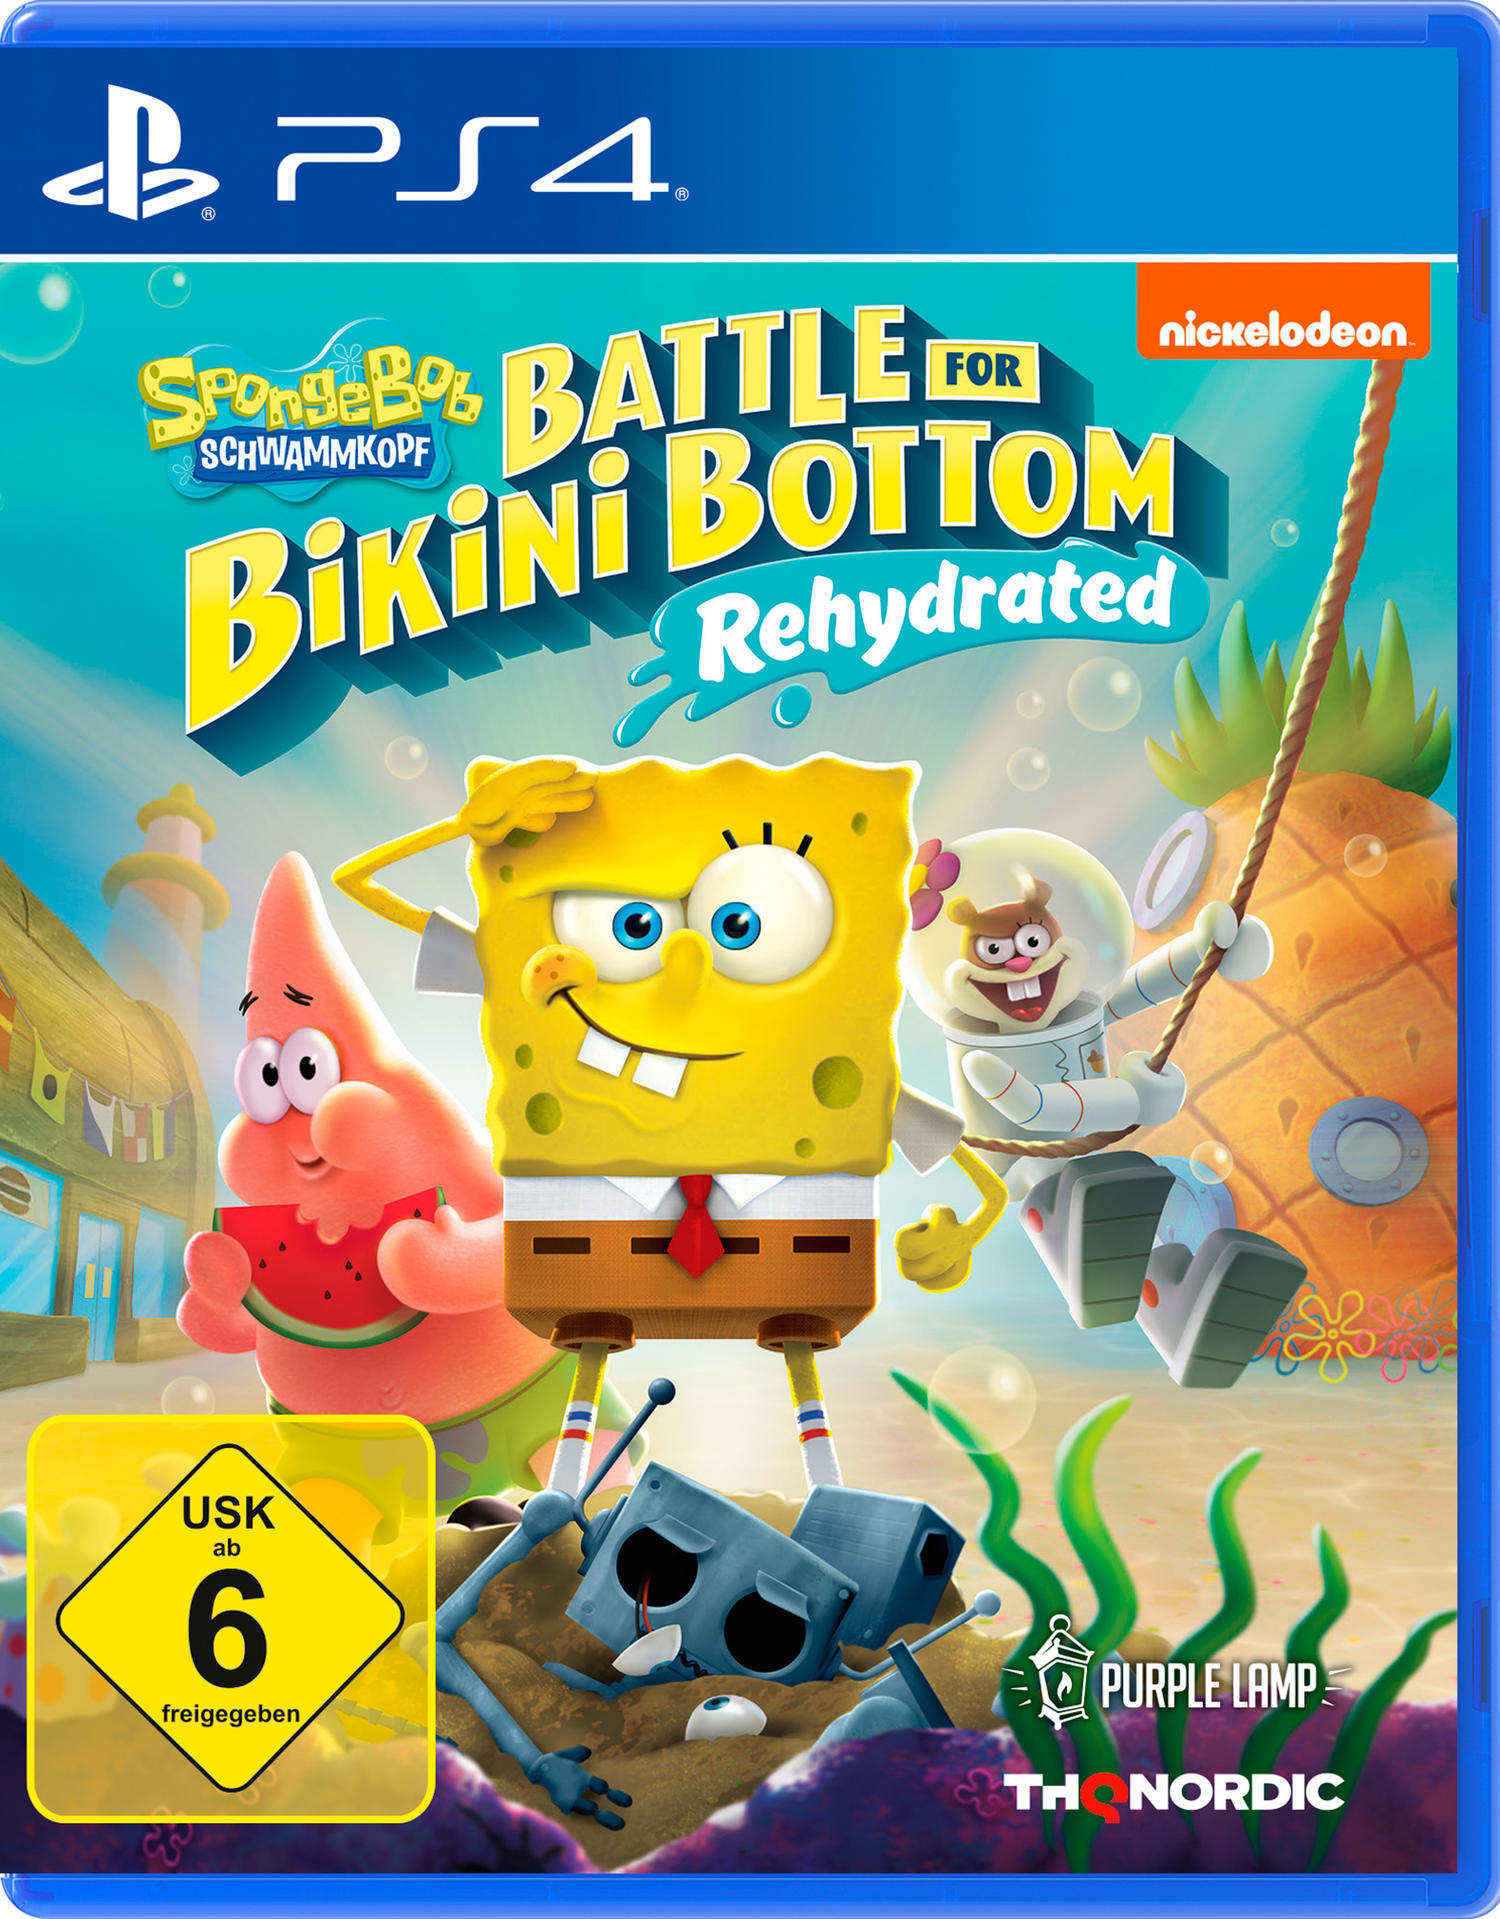 Spongebob SquarePants: Battle for Bikini 4] - - [PlayStation Rehydrated Bottom